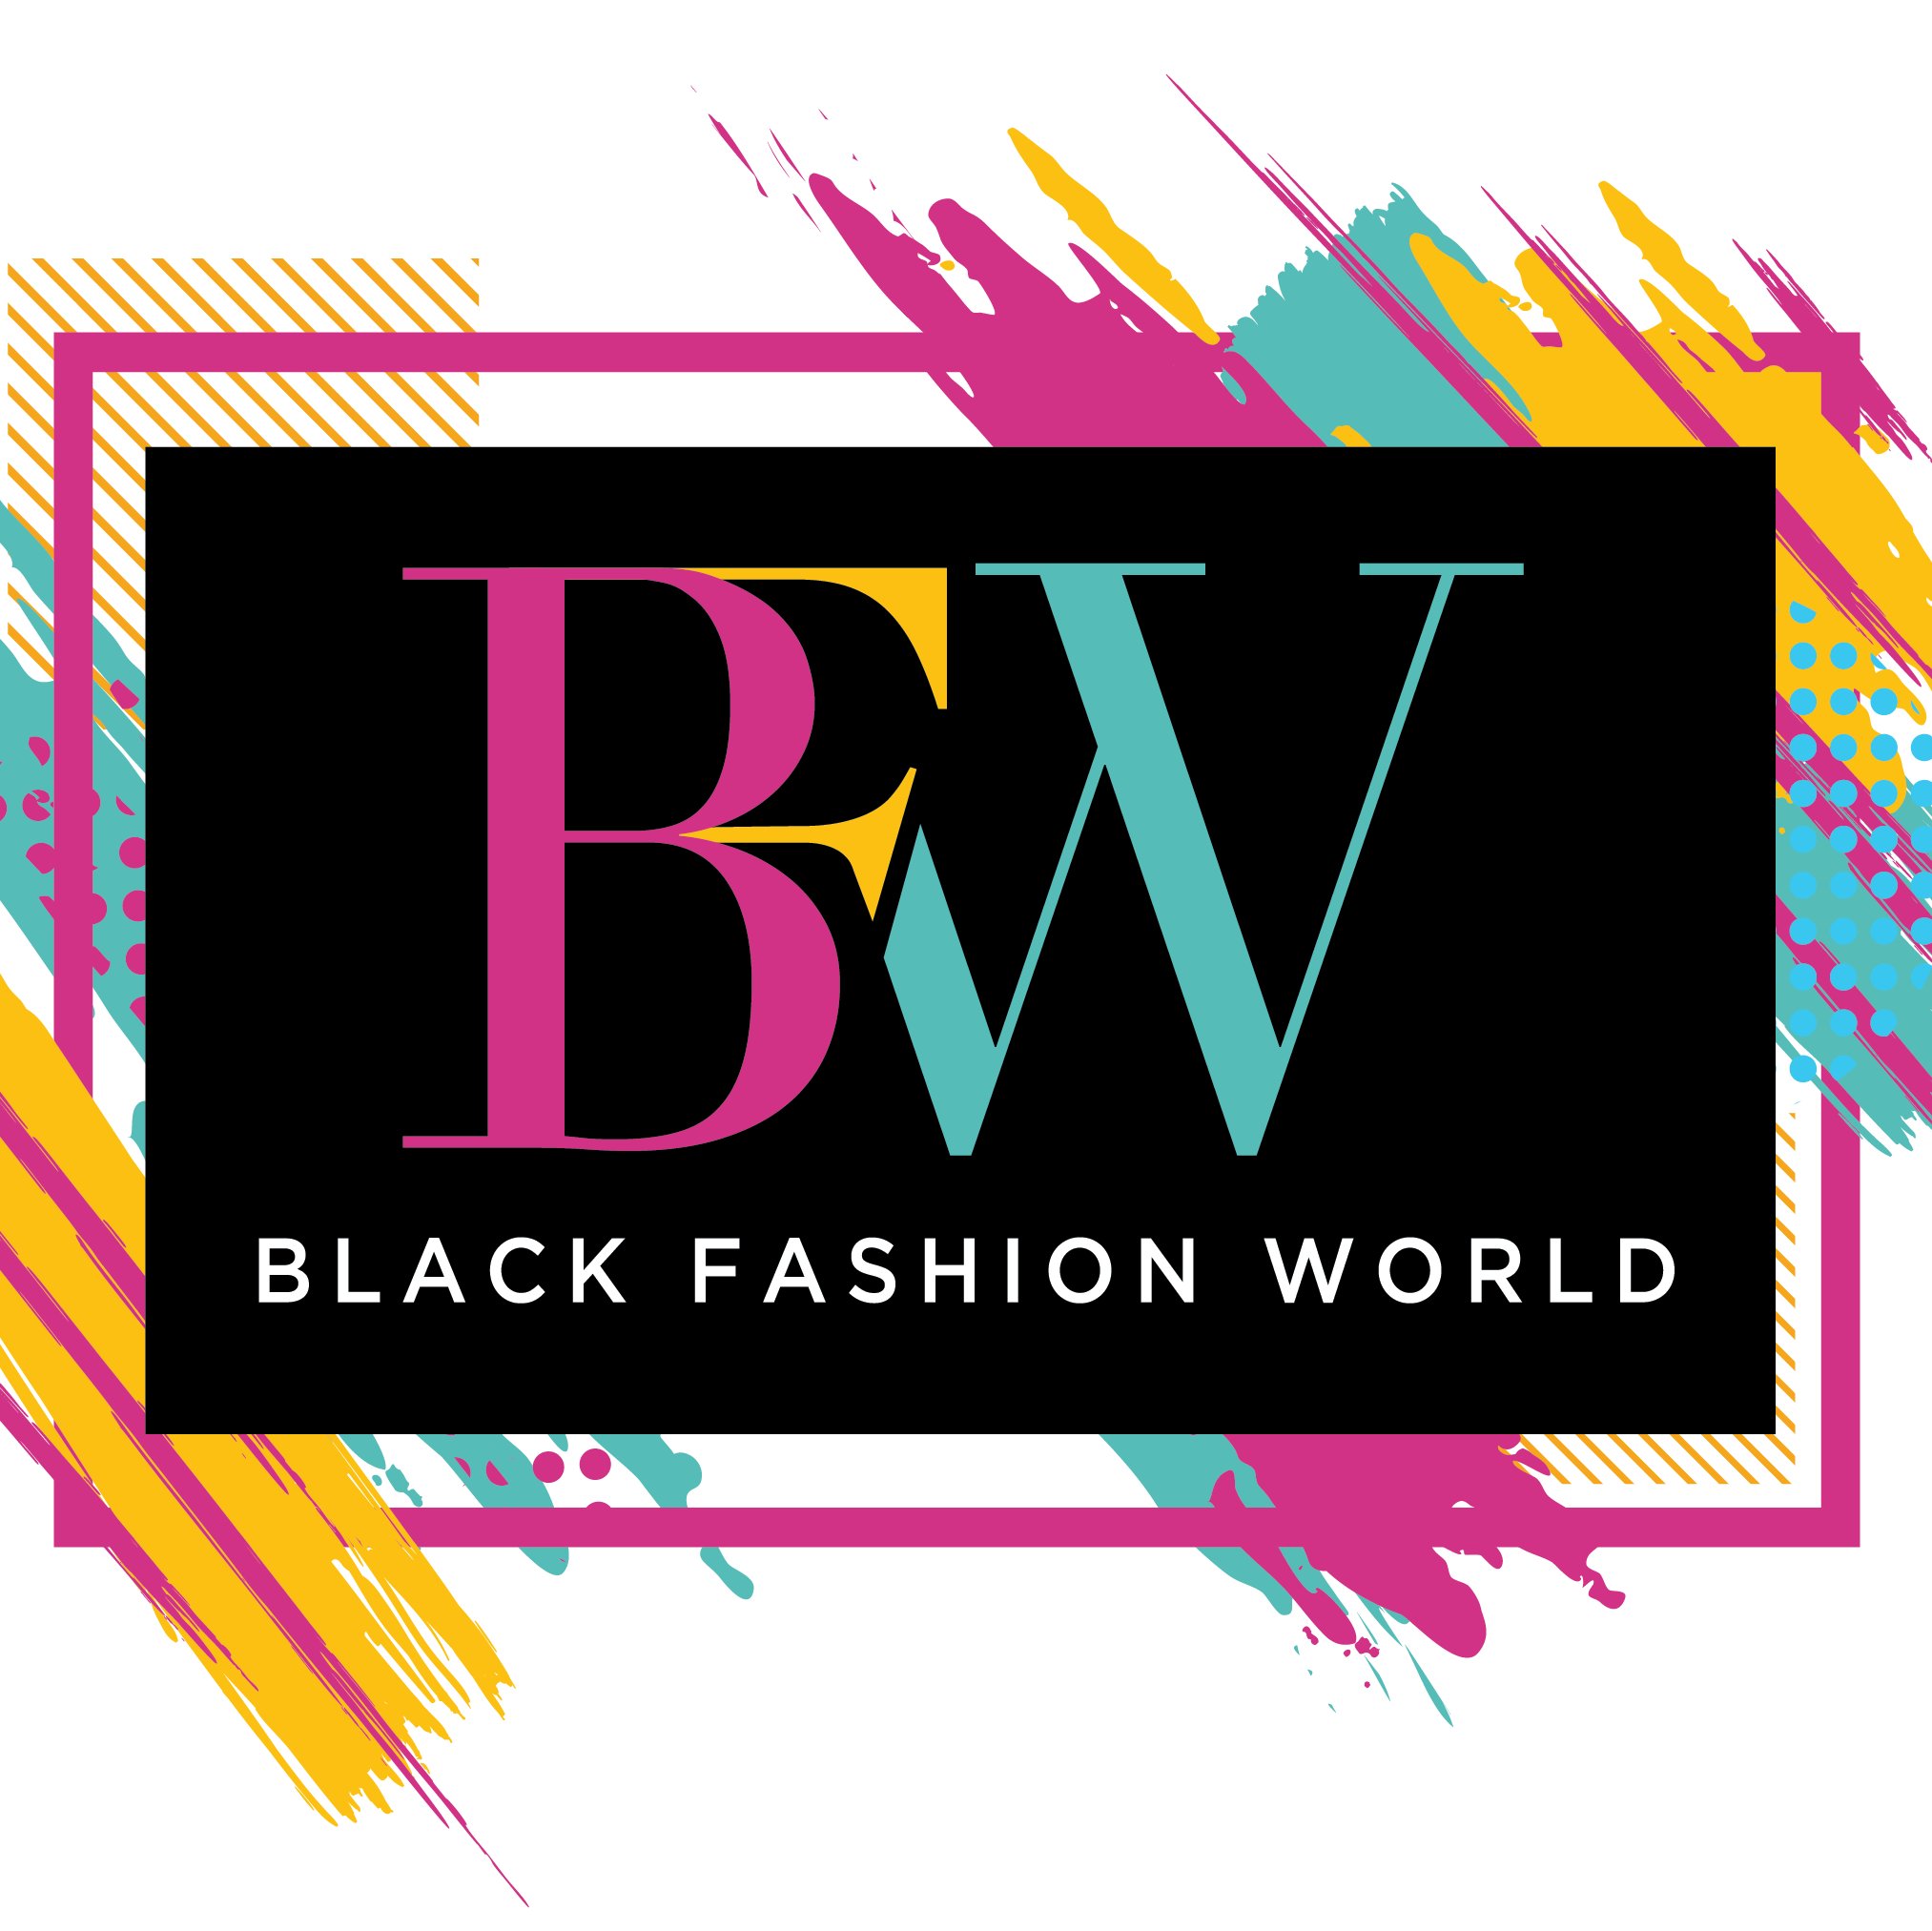 Empowering Black Fashion-preneurs!
#BFWFOUNDATION
#BlackFashionWorld
#BlackFashionMatters
#EmpoweringBlackFashion-Preneurs